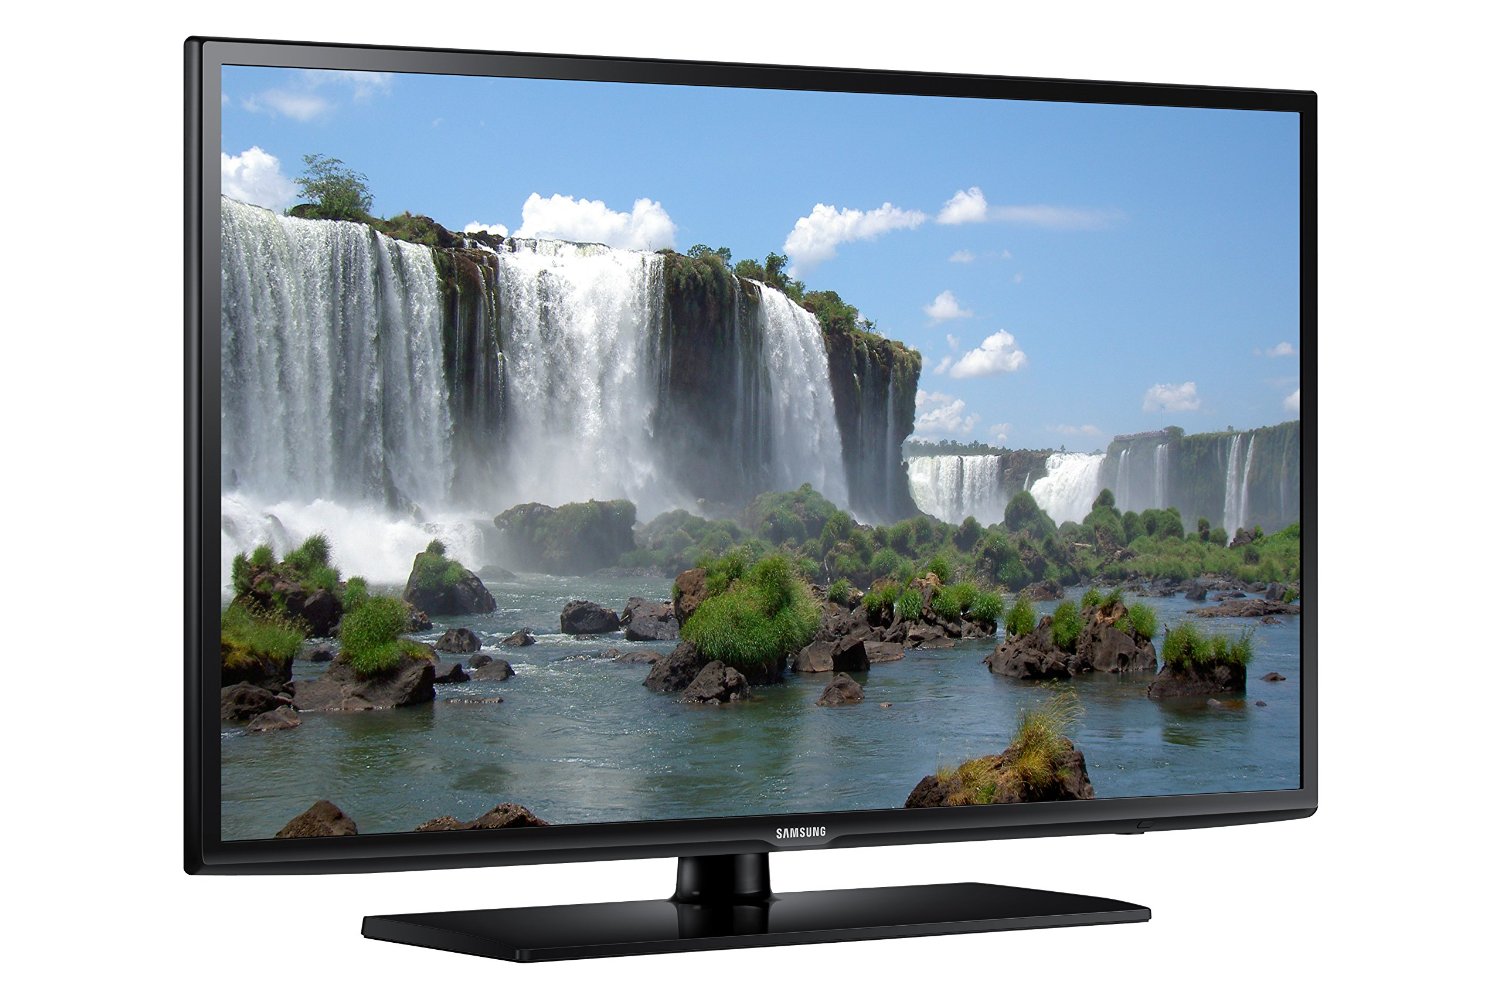 Samsung UN55J6200 55-Inch 1080p Smart LED TV (2015 Model)